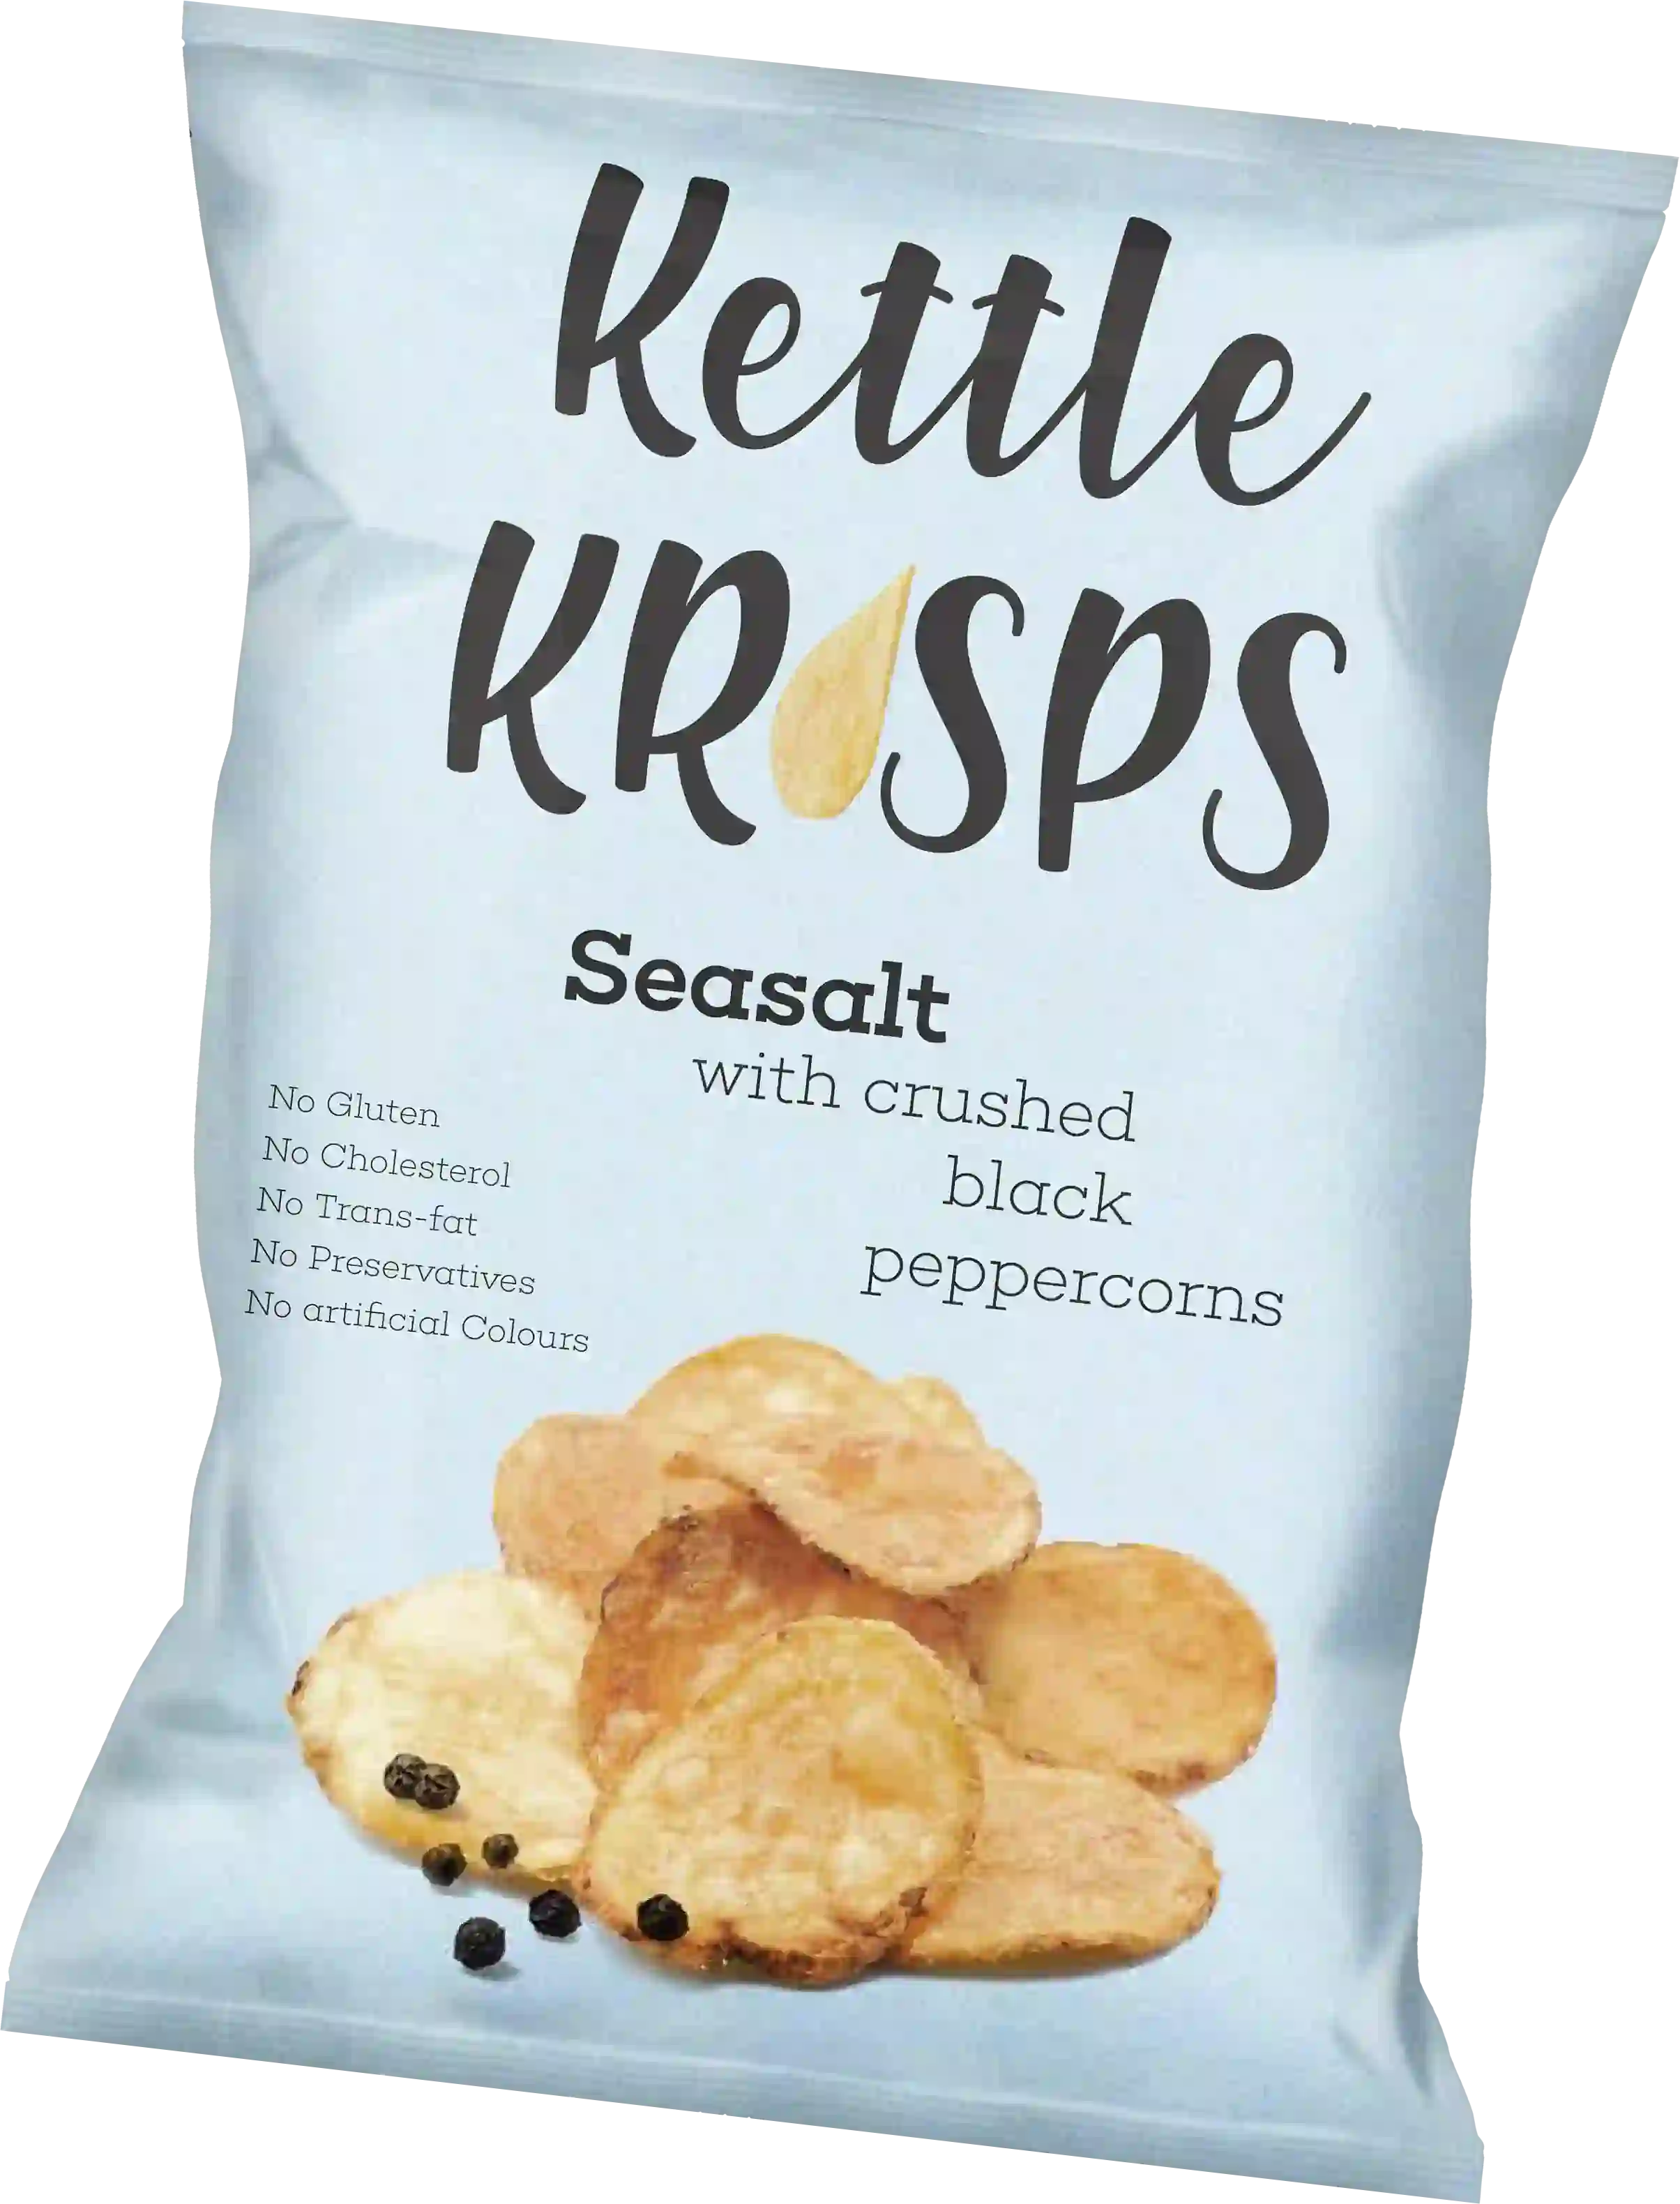 Kettle Krisps Seasalt &Crushed peppercorns POUCH